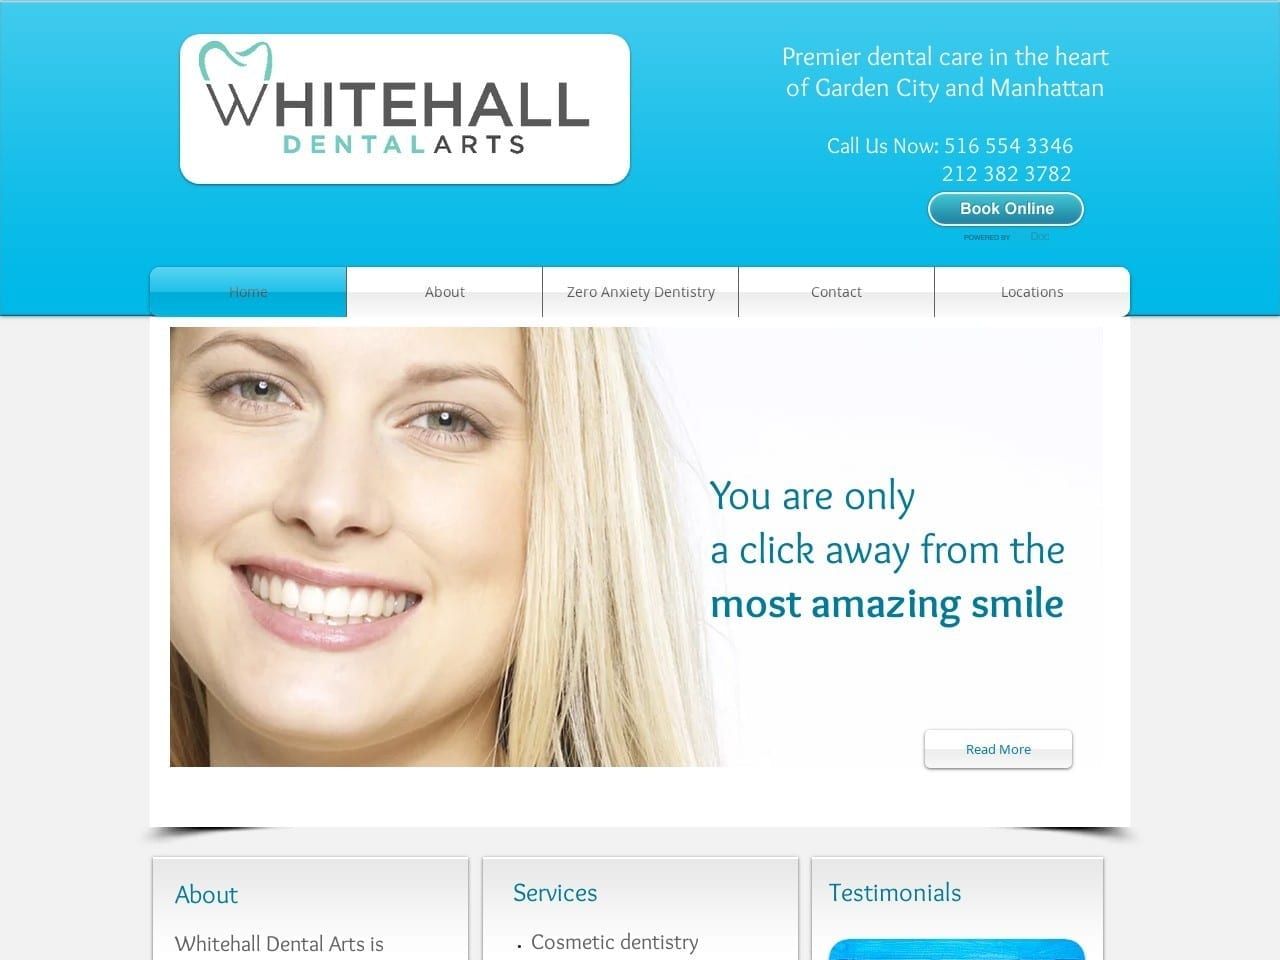 Whitehall Dental Arts Website Screenshot from whitehalldentalarts.com